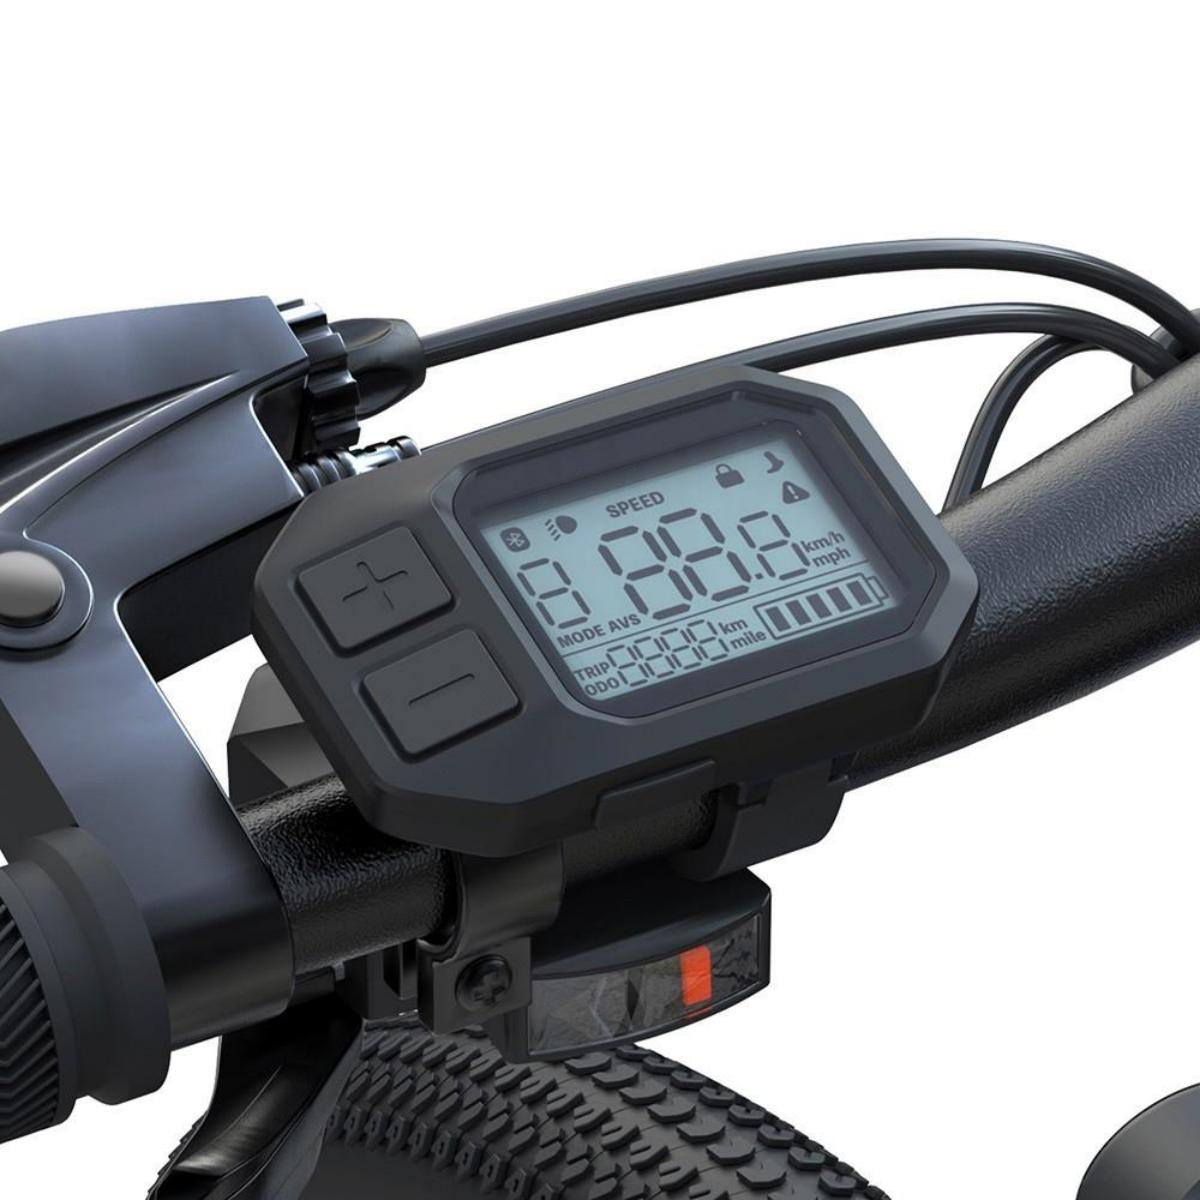 ELEGLIDE Plus 450Wh, Mountainbike Black) Unisex-Rad, M1 29 (Laufradgröße: Zoll, APP 29\